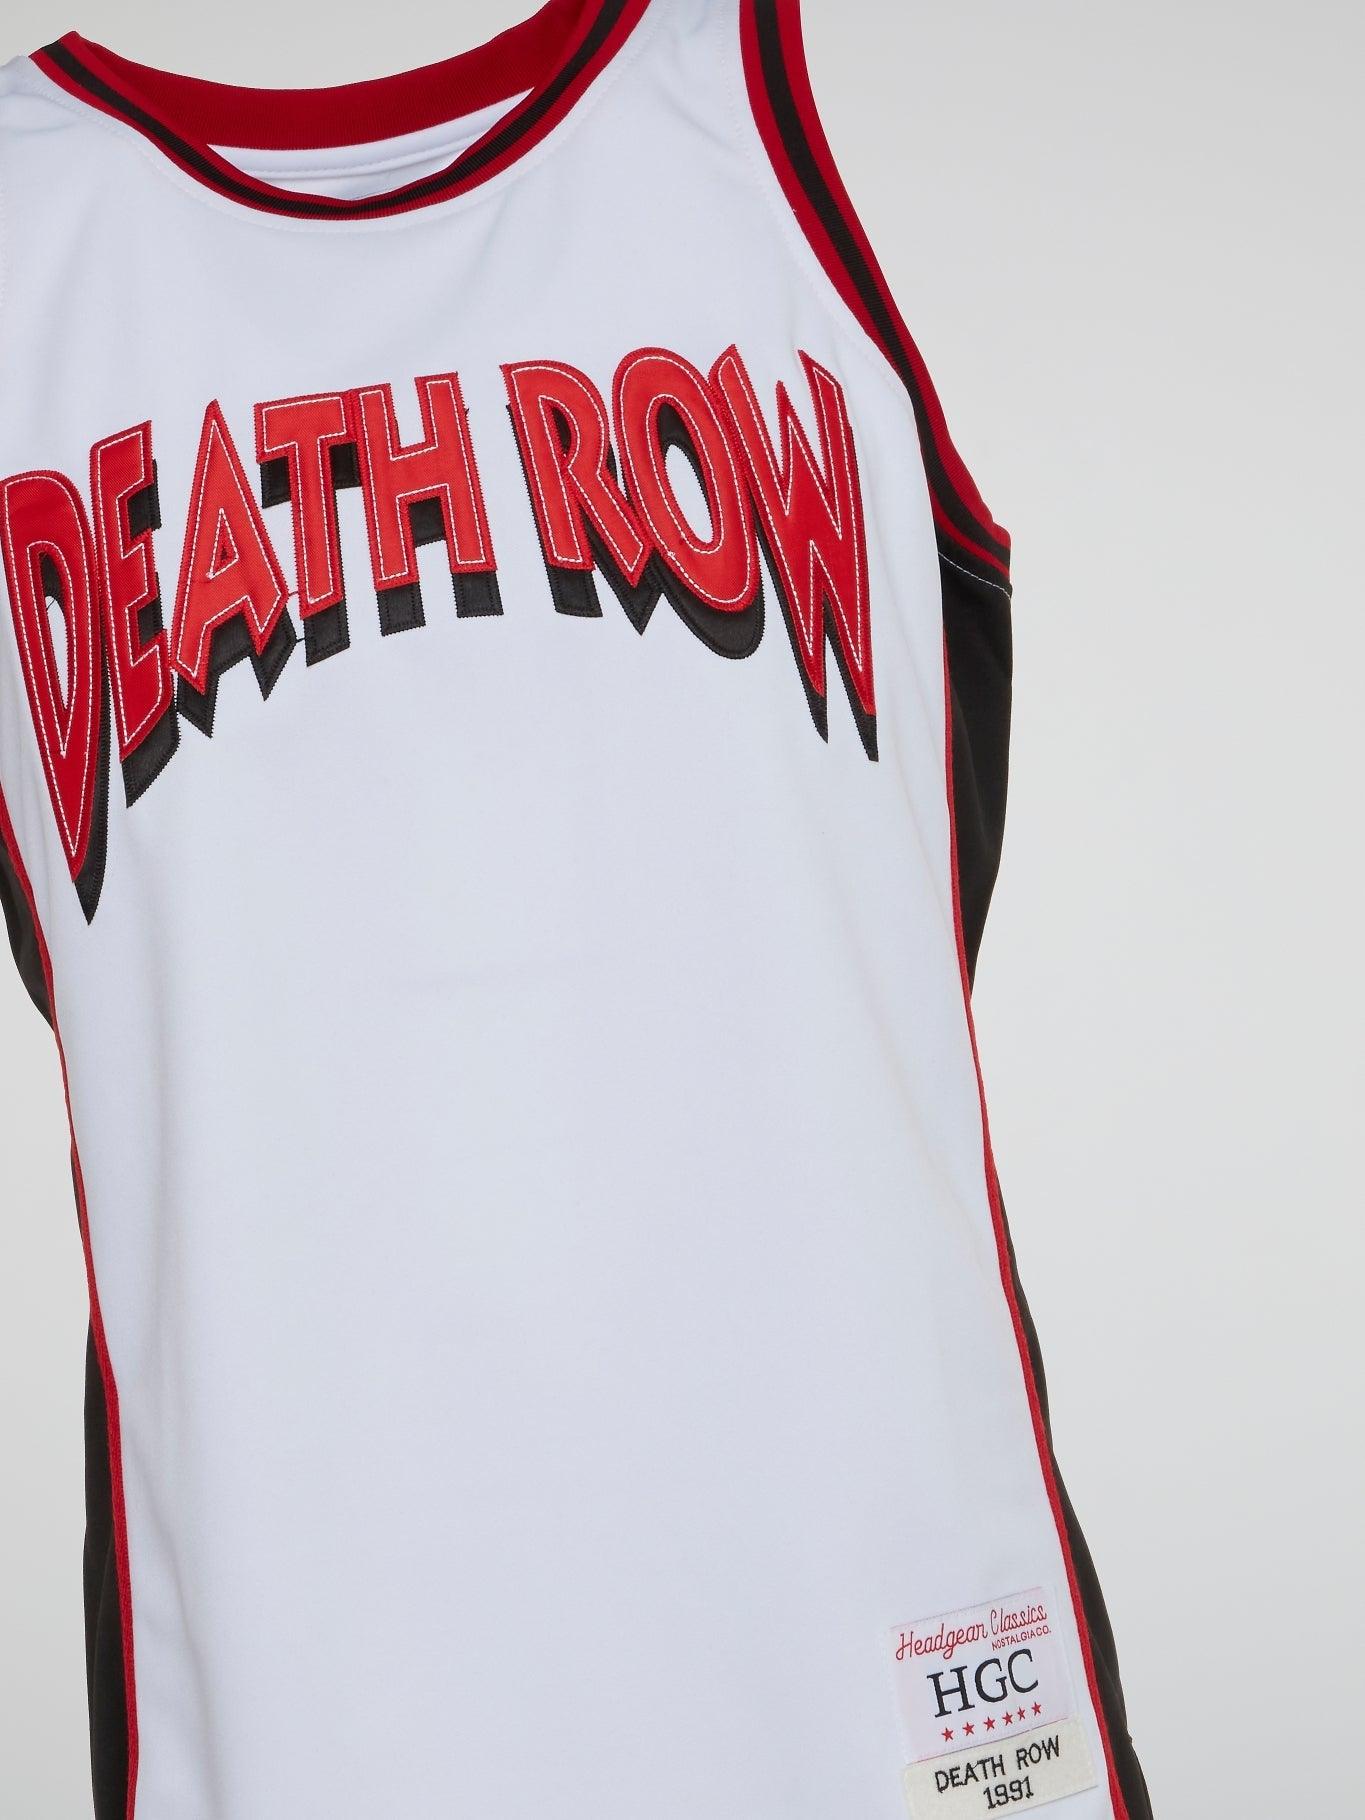 Death Row Records White Jersey - B-Hype Society